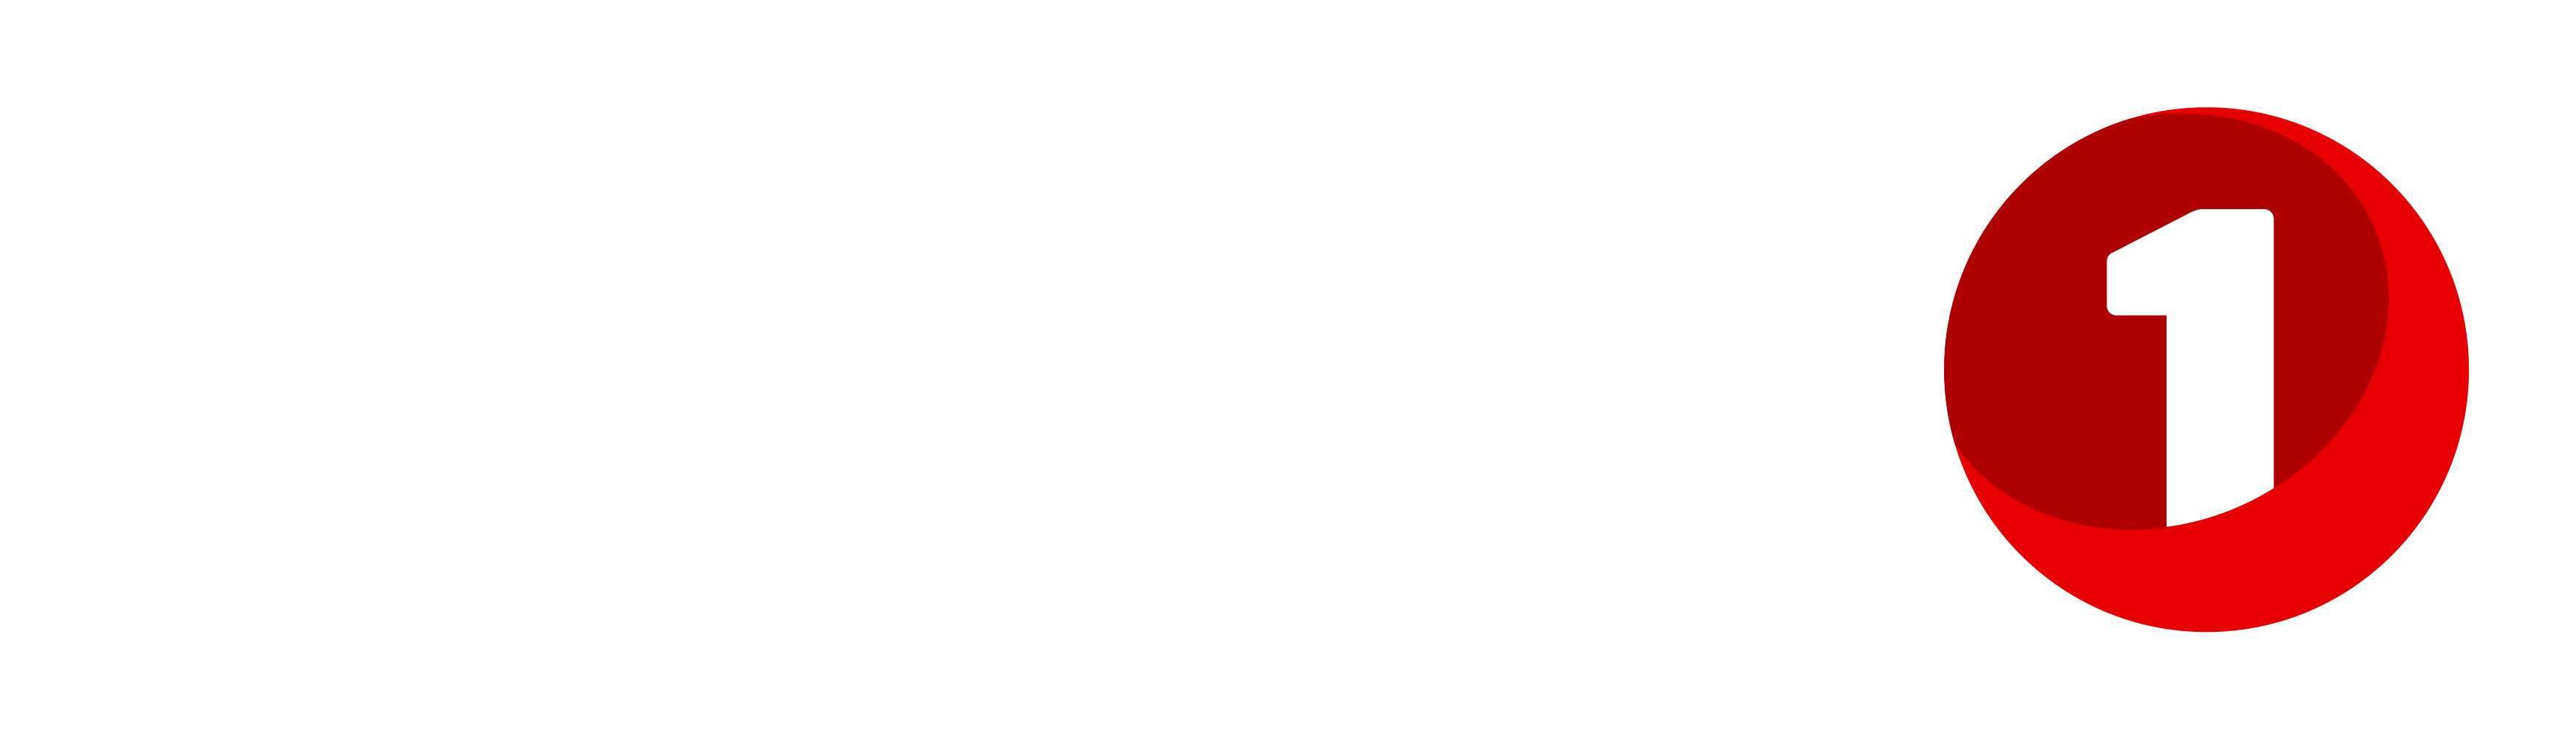 Sparebank 1. Пятый канал логотип. Spare Bank Norway логотип. Ned лого. Пятерка тв